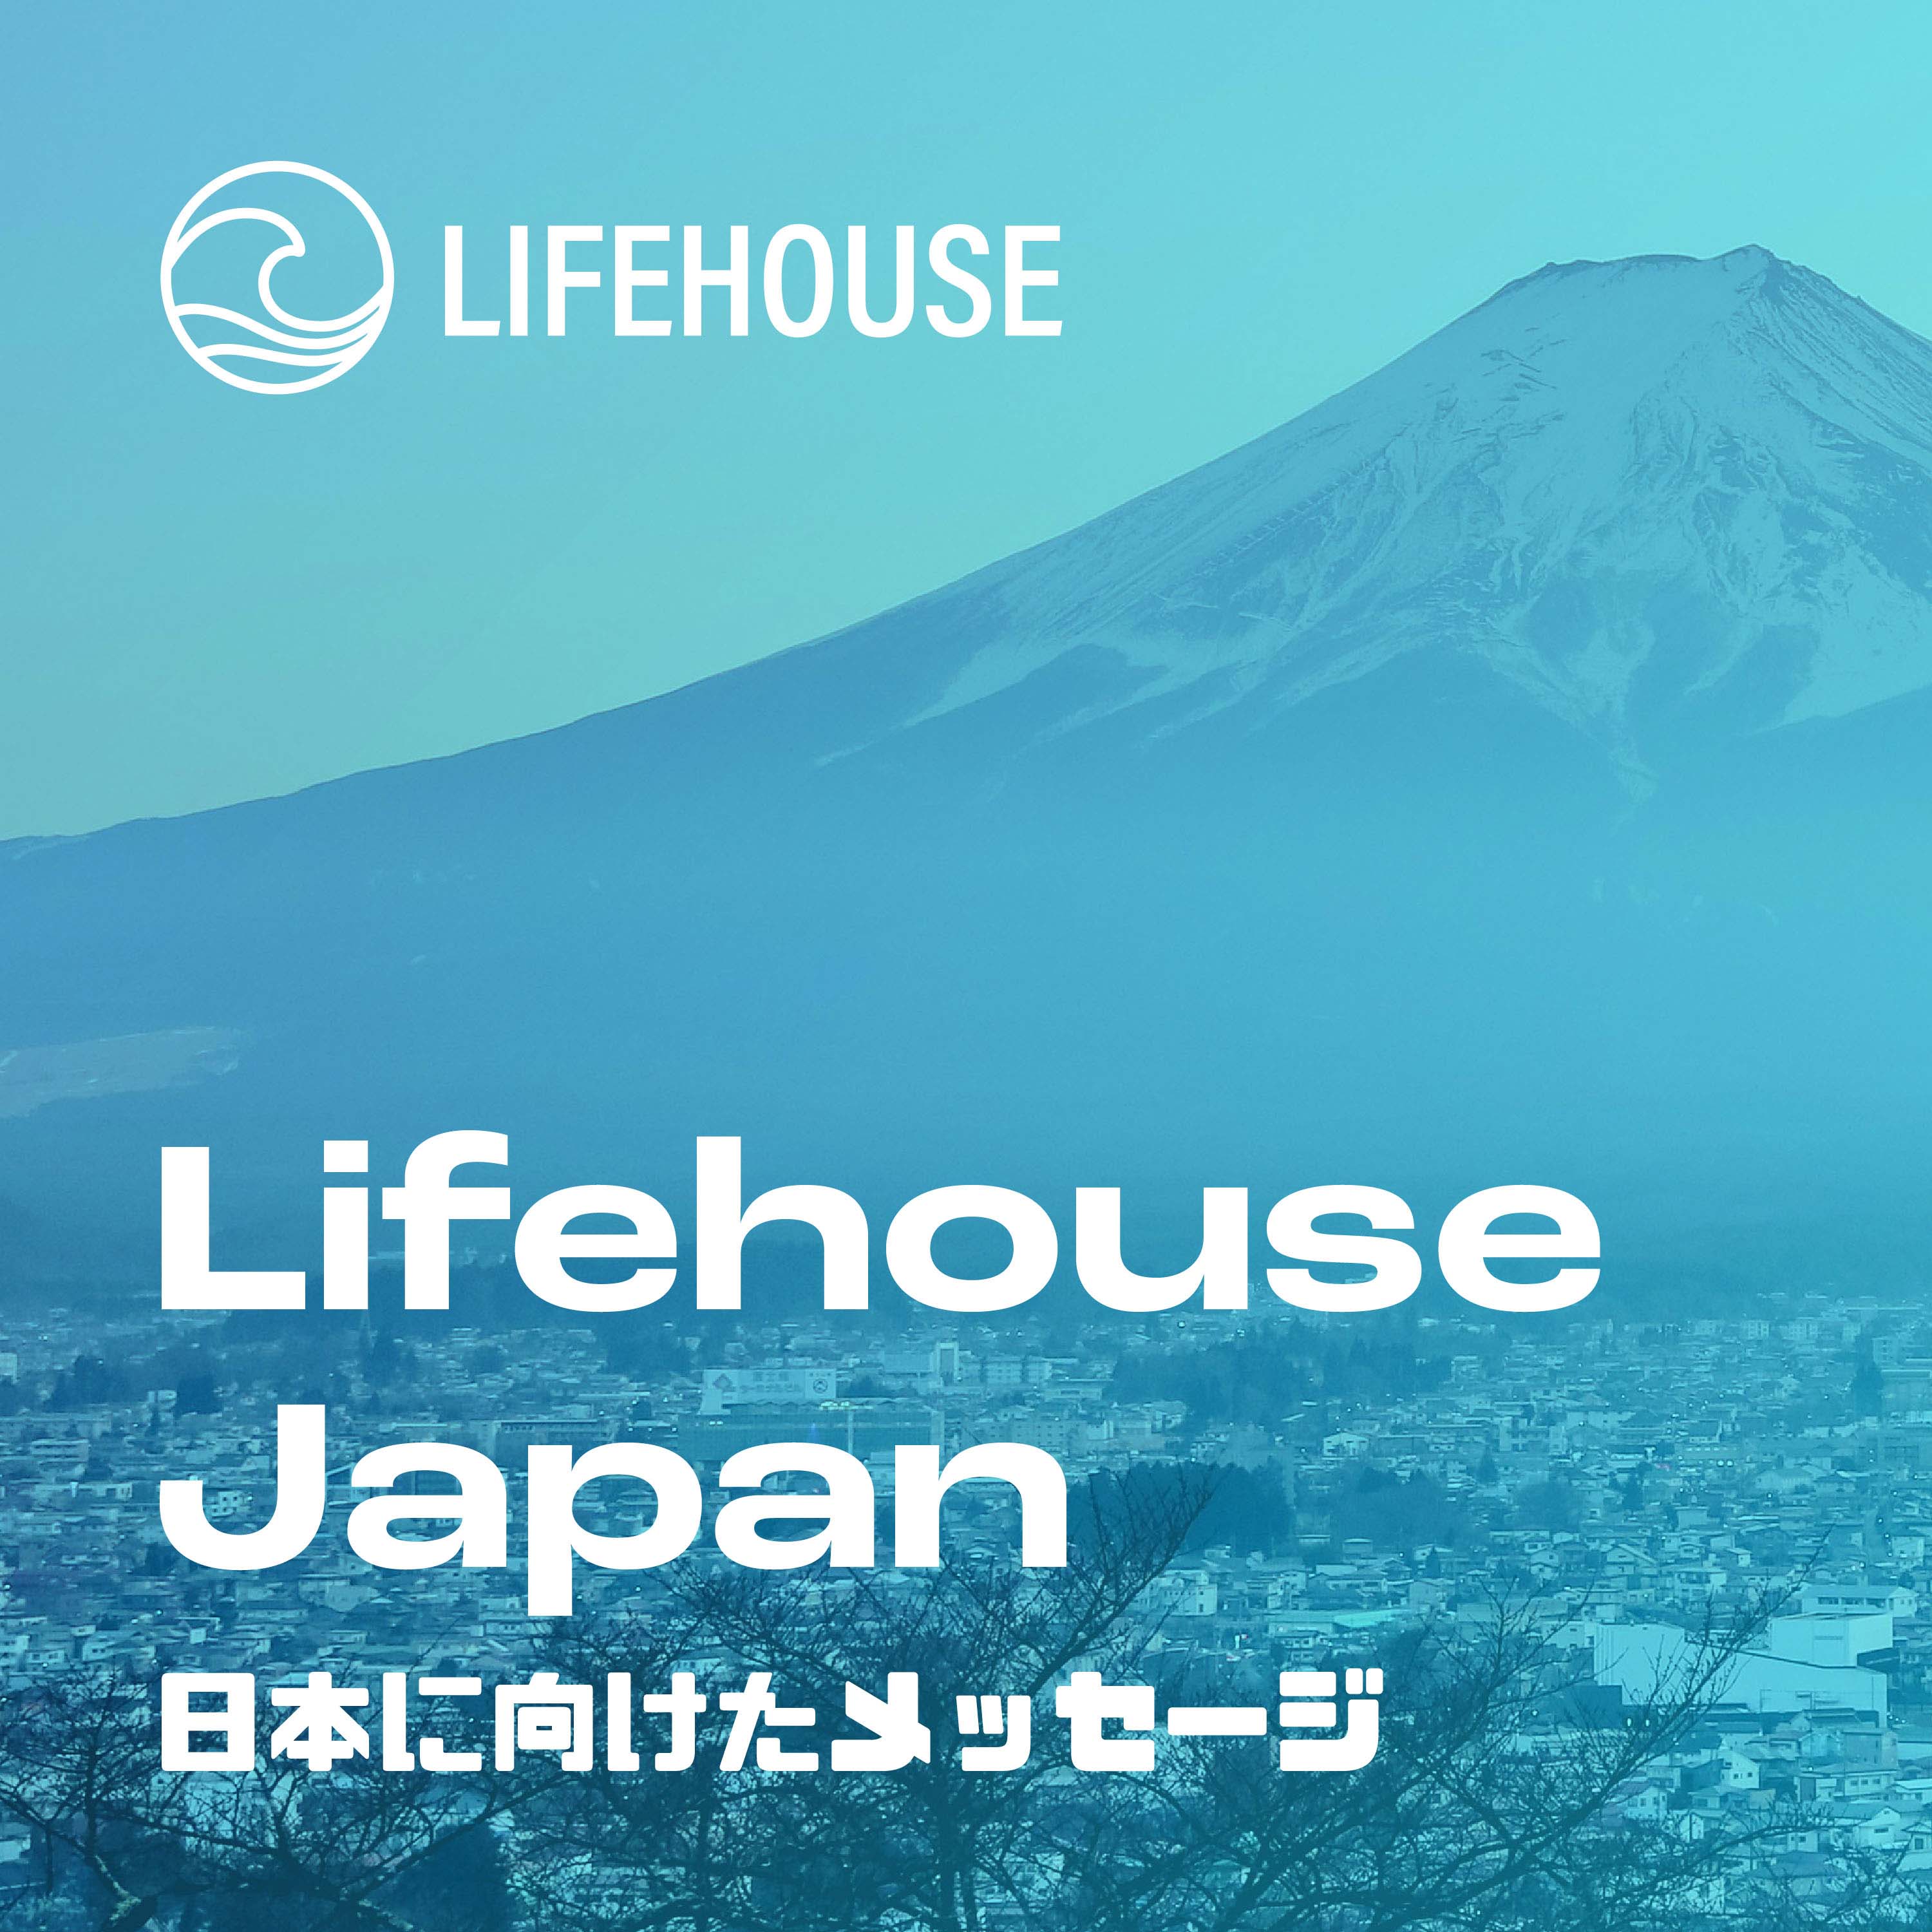 Artwork for Lifehouse Japan